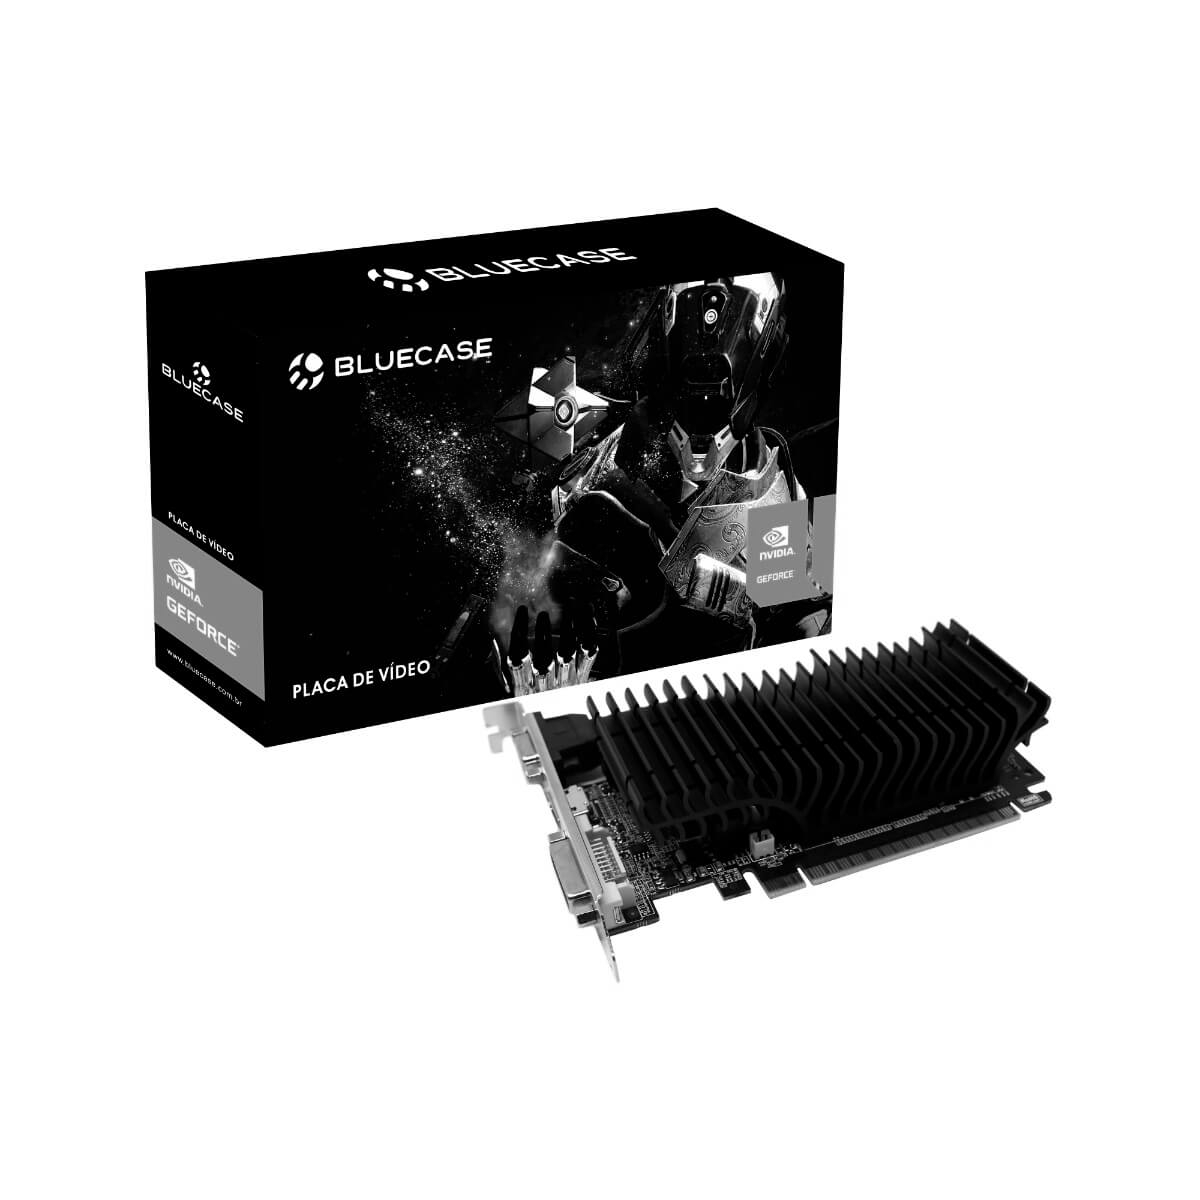 GPU GT 210 1GB DDR3 64 BITS BLUECASE - PN BP-GT210-1GD3D1 - 1